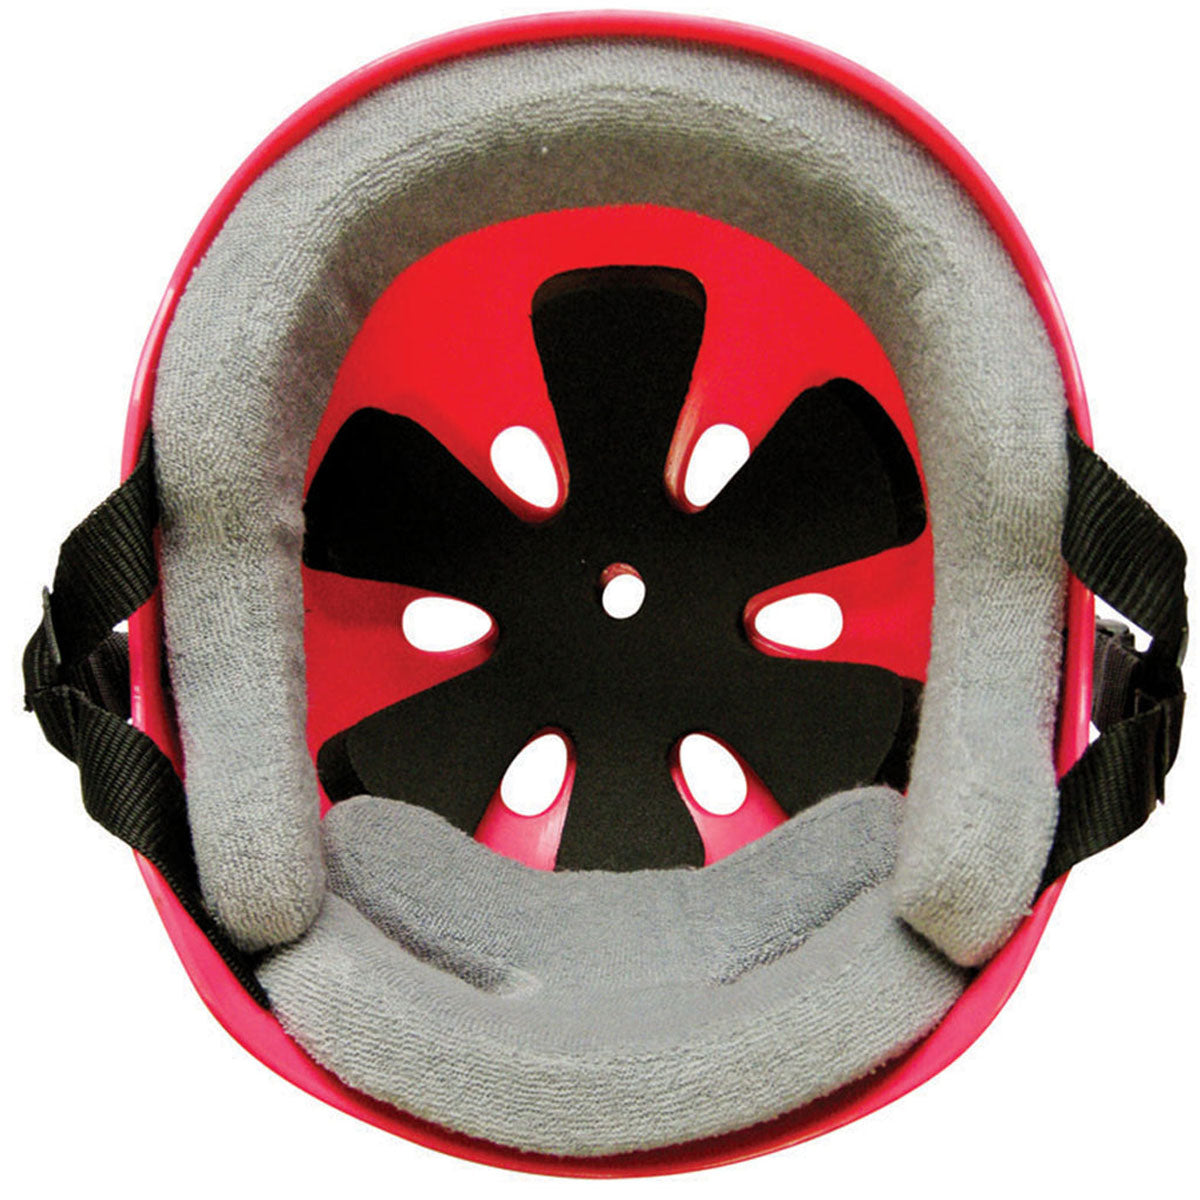 Triple Eight Sweatsaver Helmet - Black/White image 2